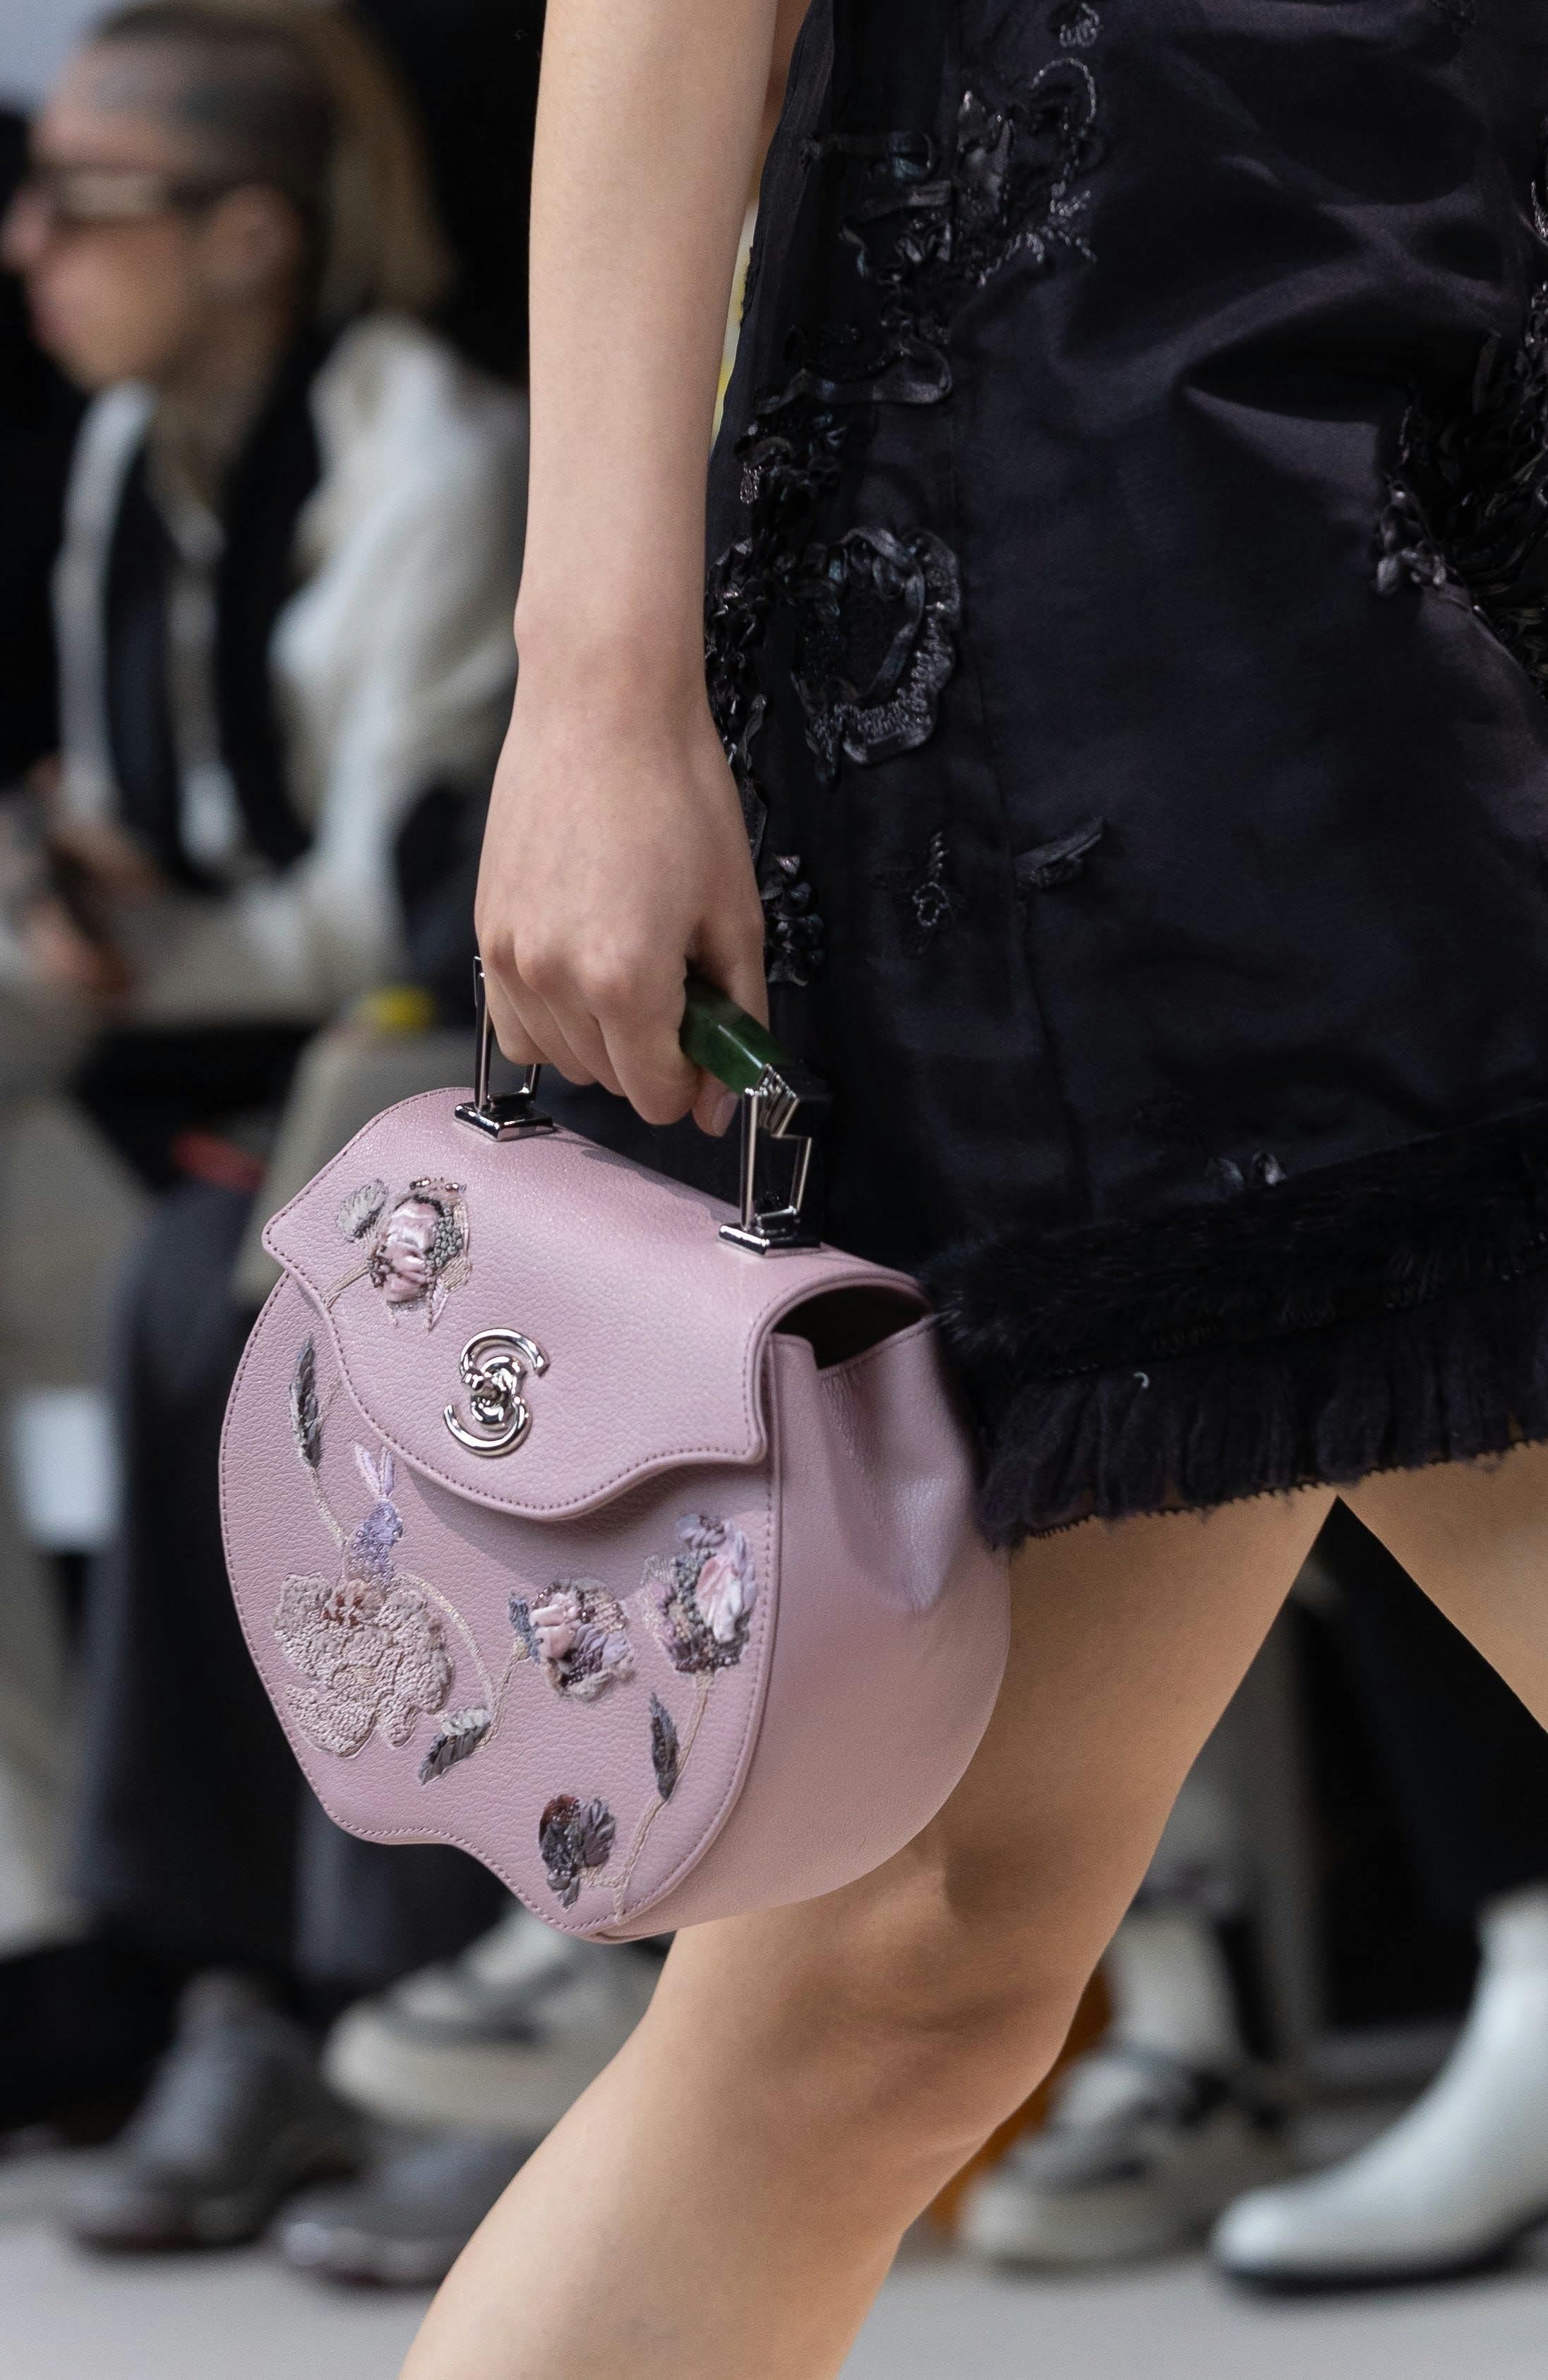 accessories bag handbag purse clothing footwear shoe person